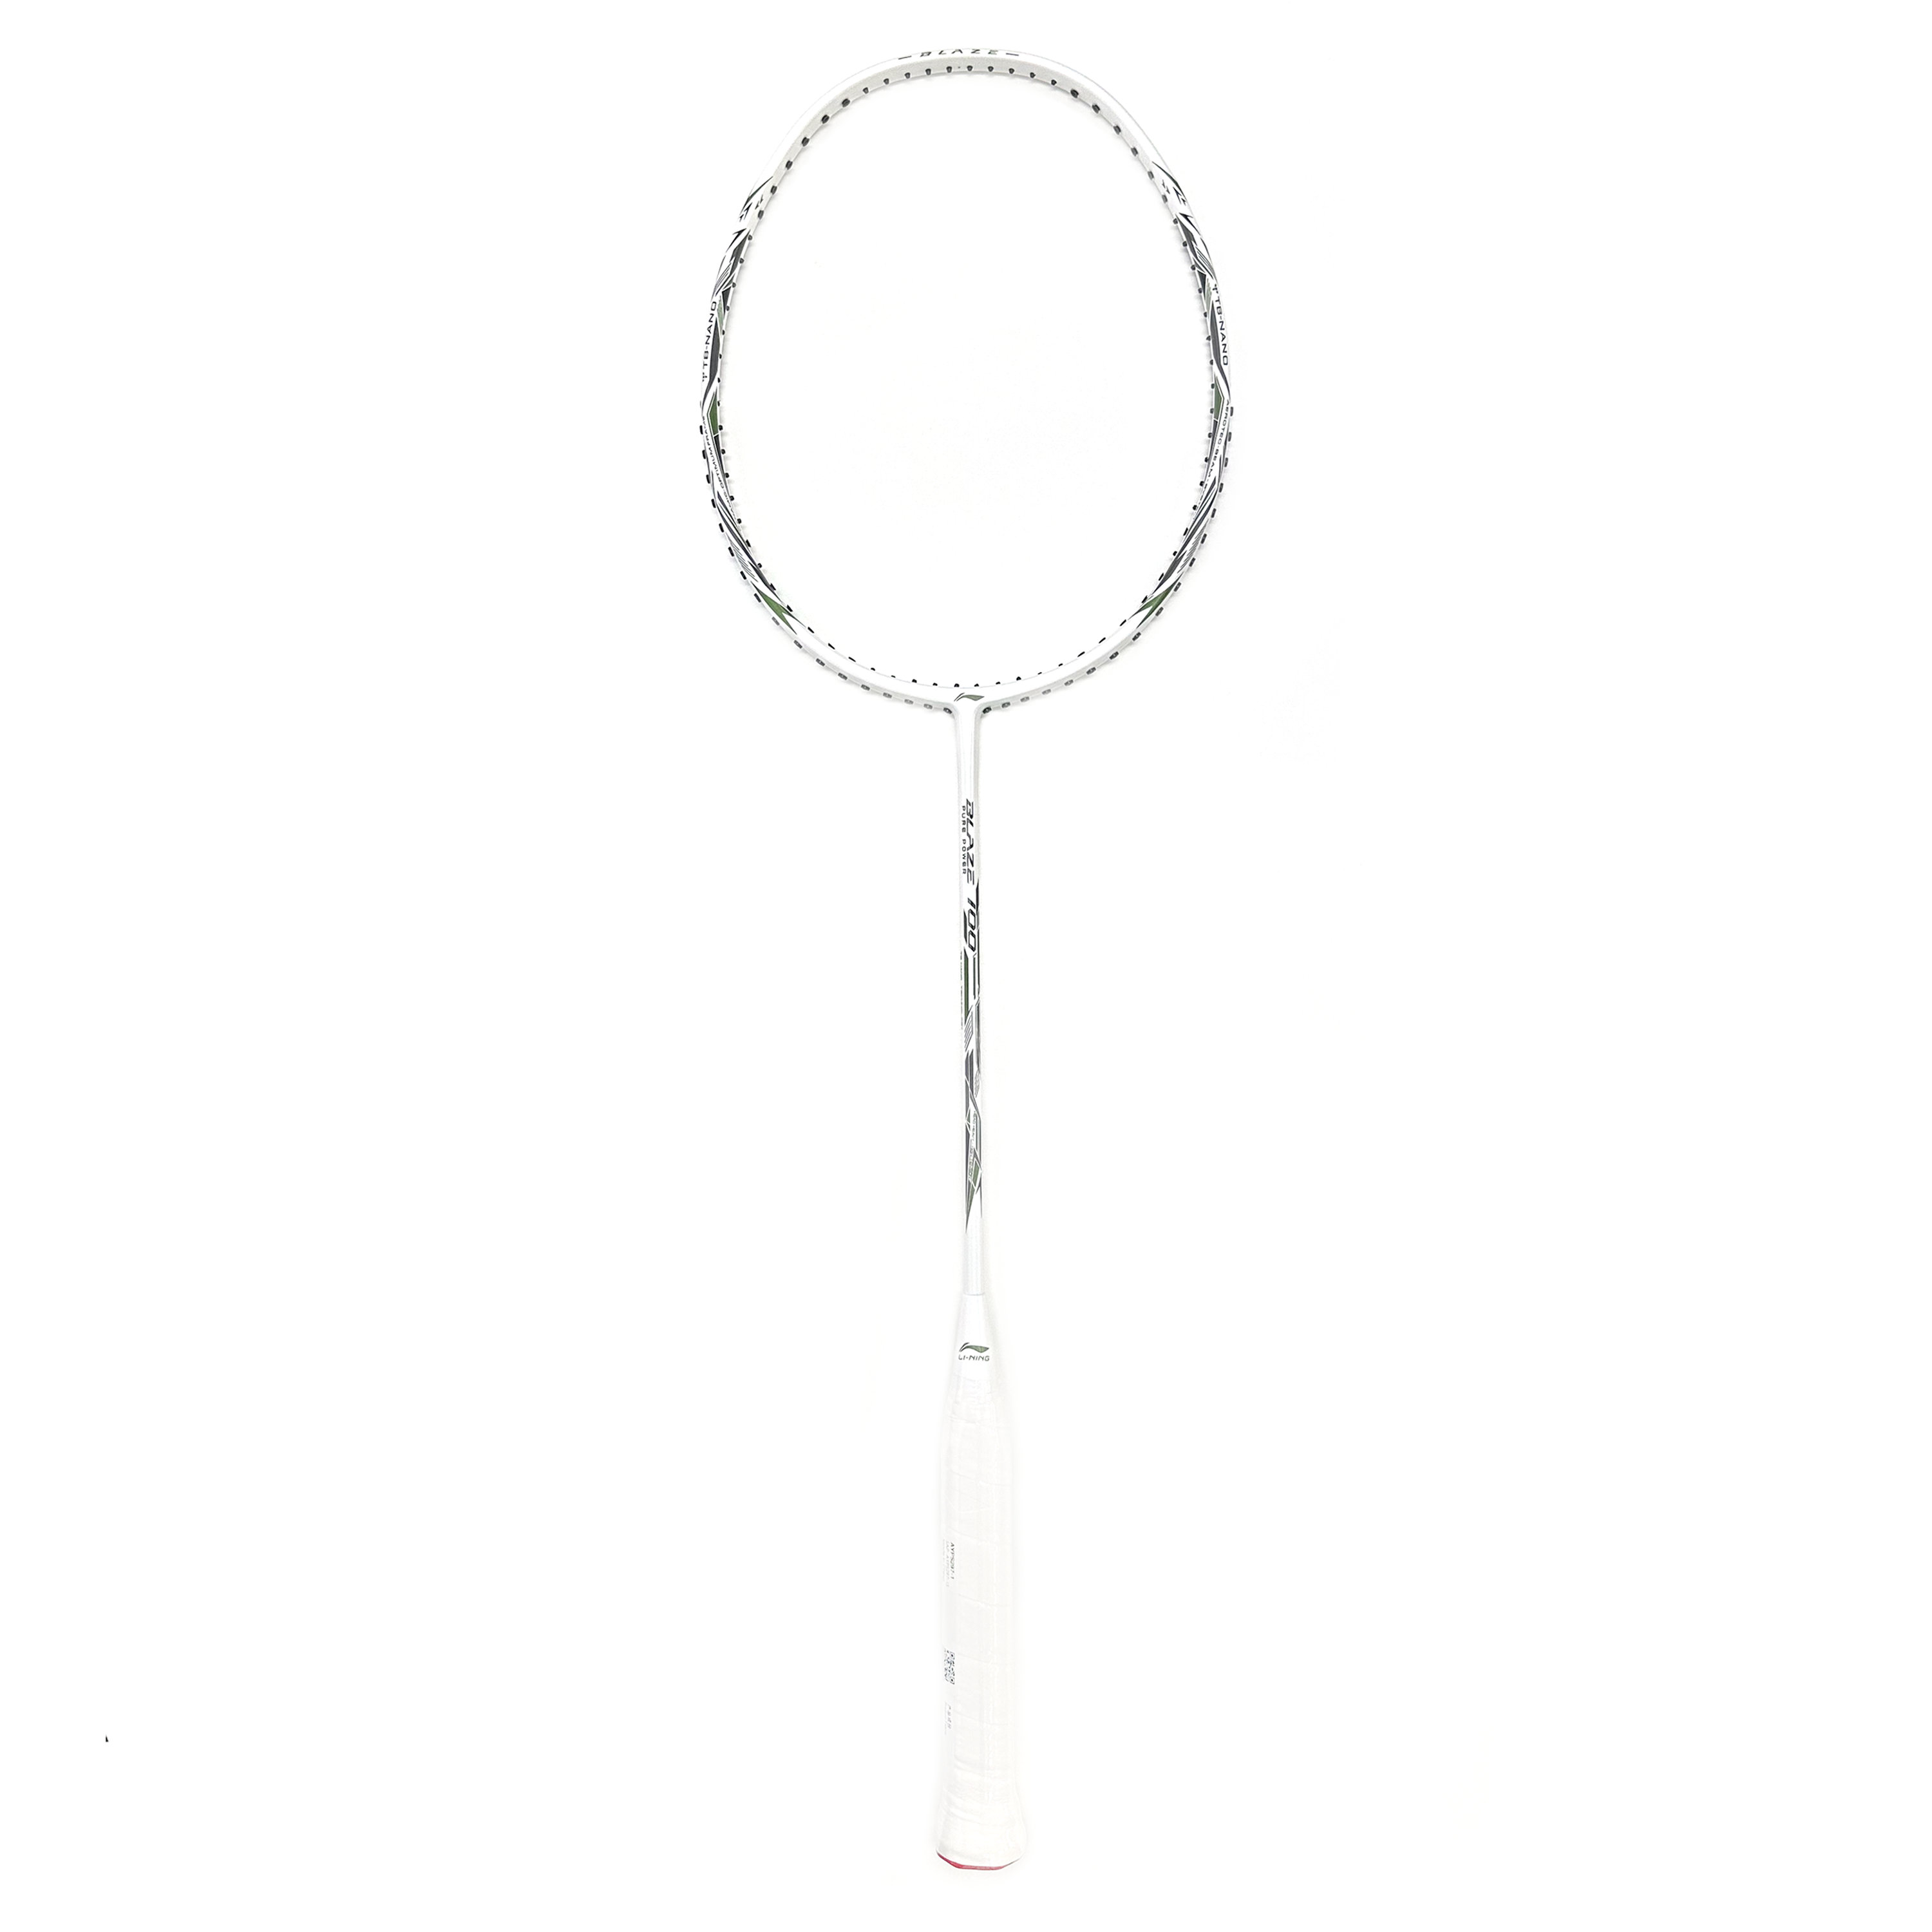 Li-Ning Blaze 100 Badminton Racquet White/ Black 4U(84g)G6